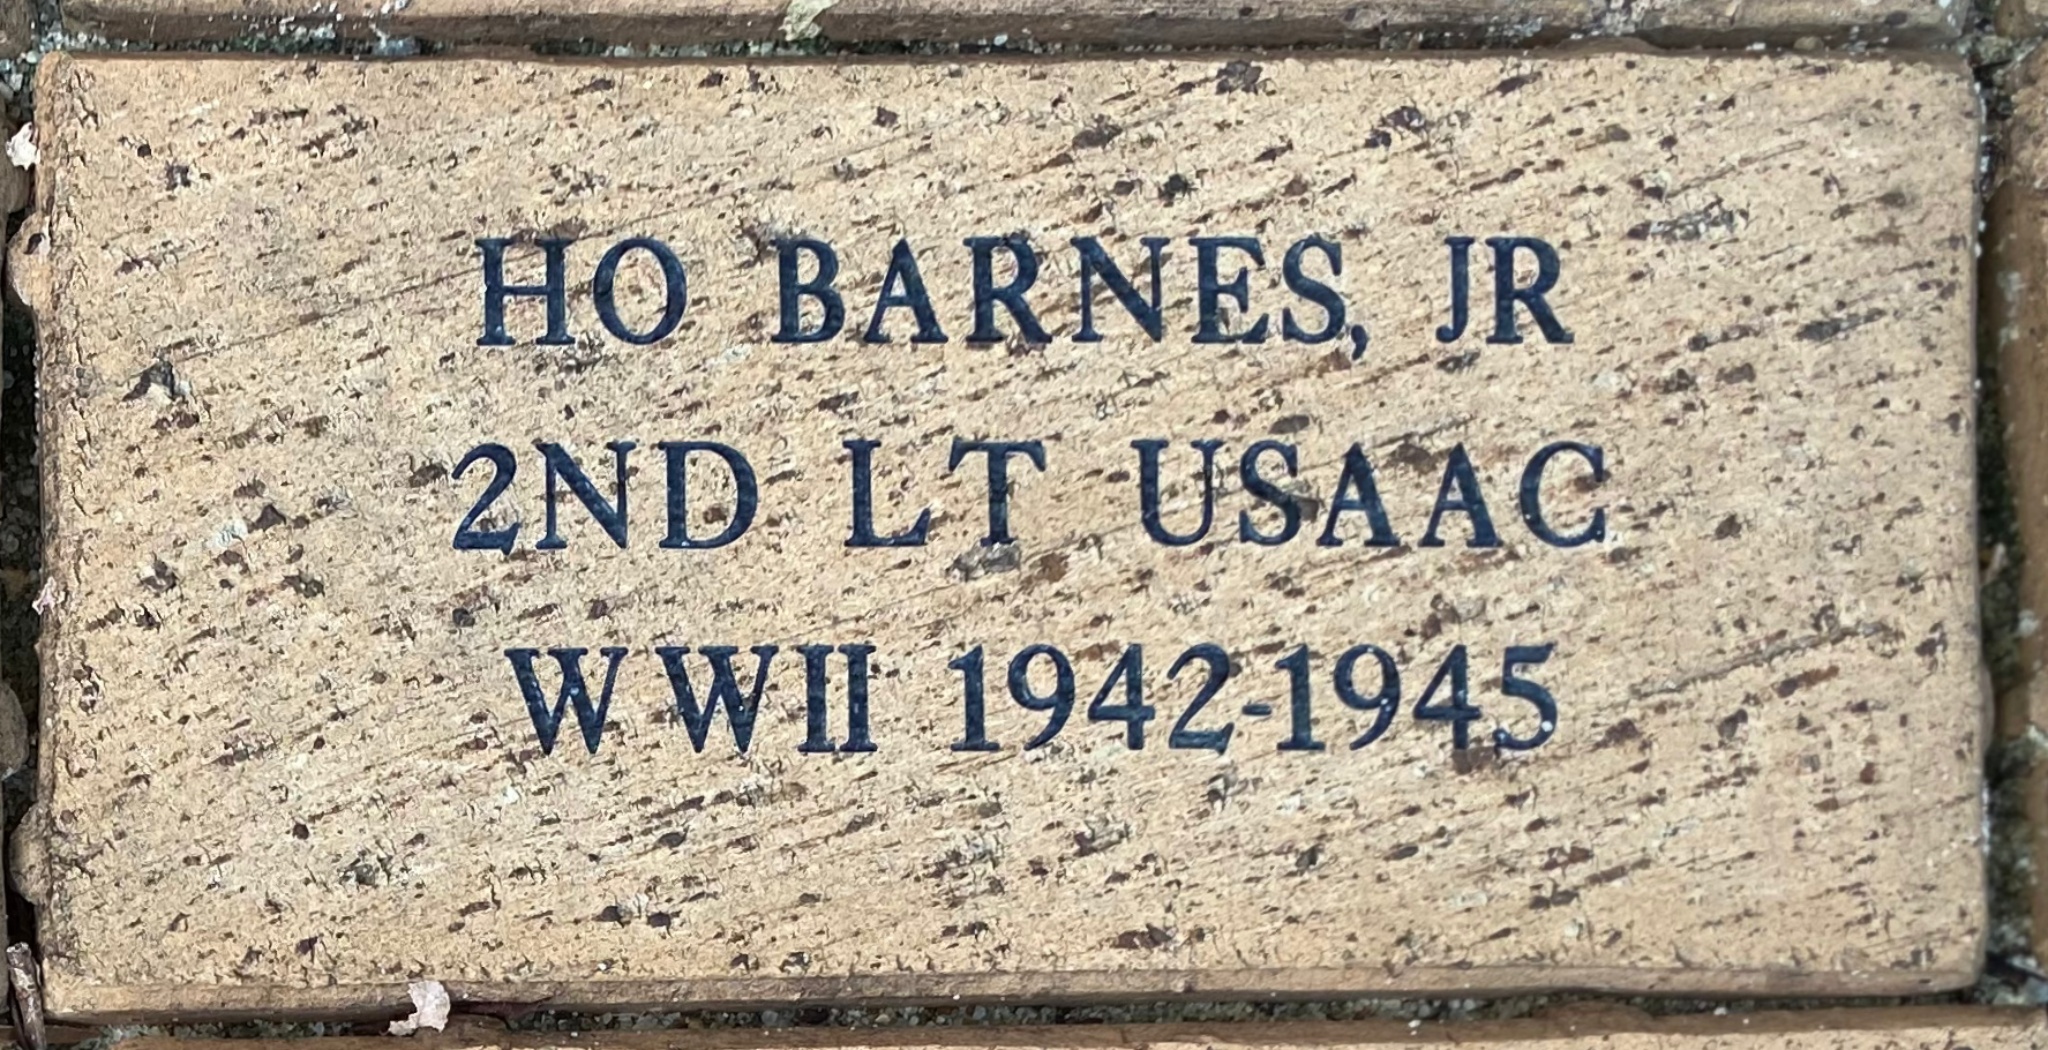 H O BARNES, JR 2ND LT USAAC WWII 1942-1945